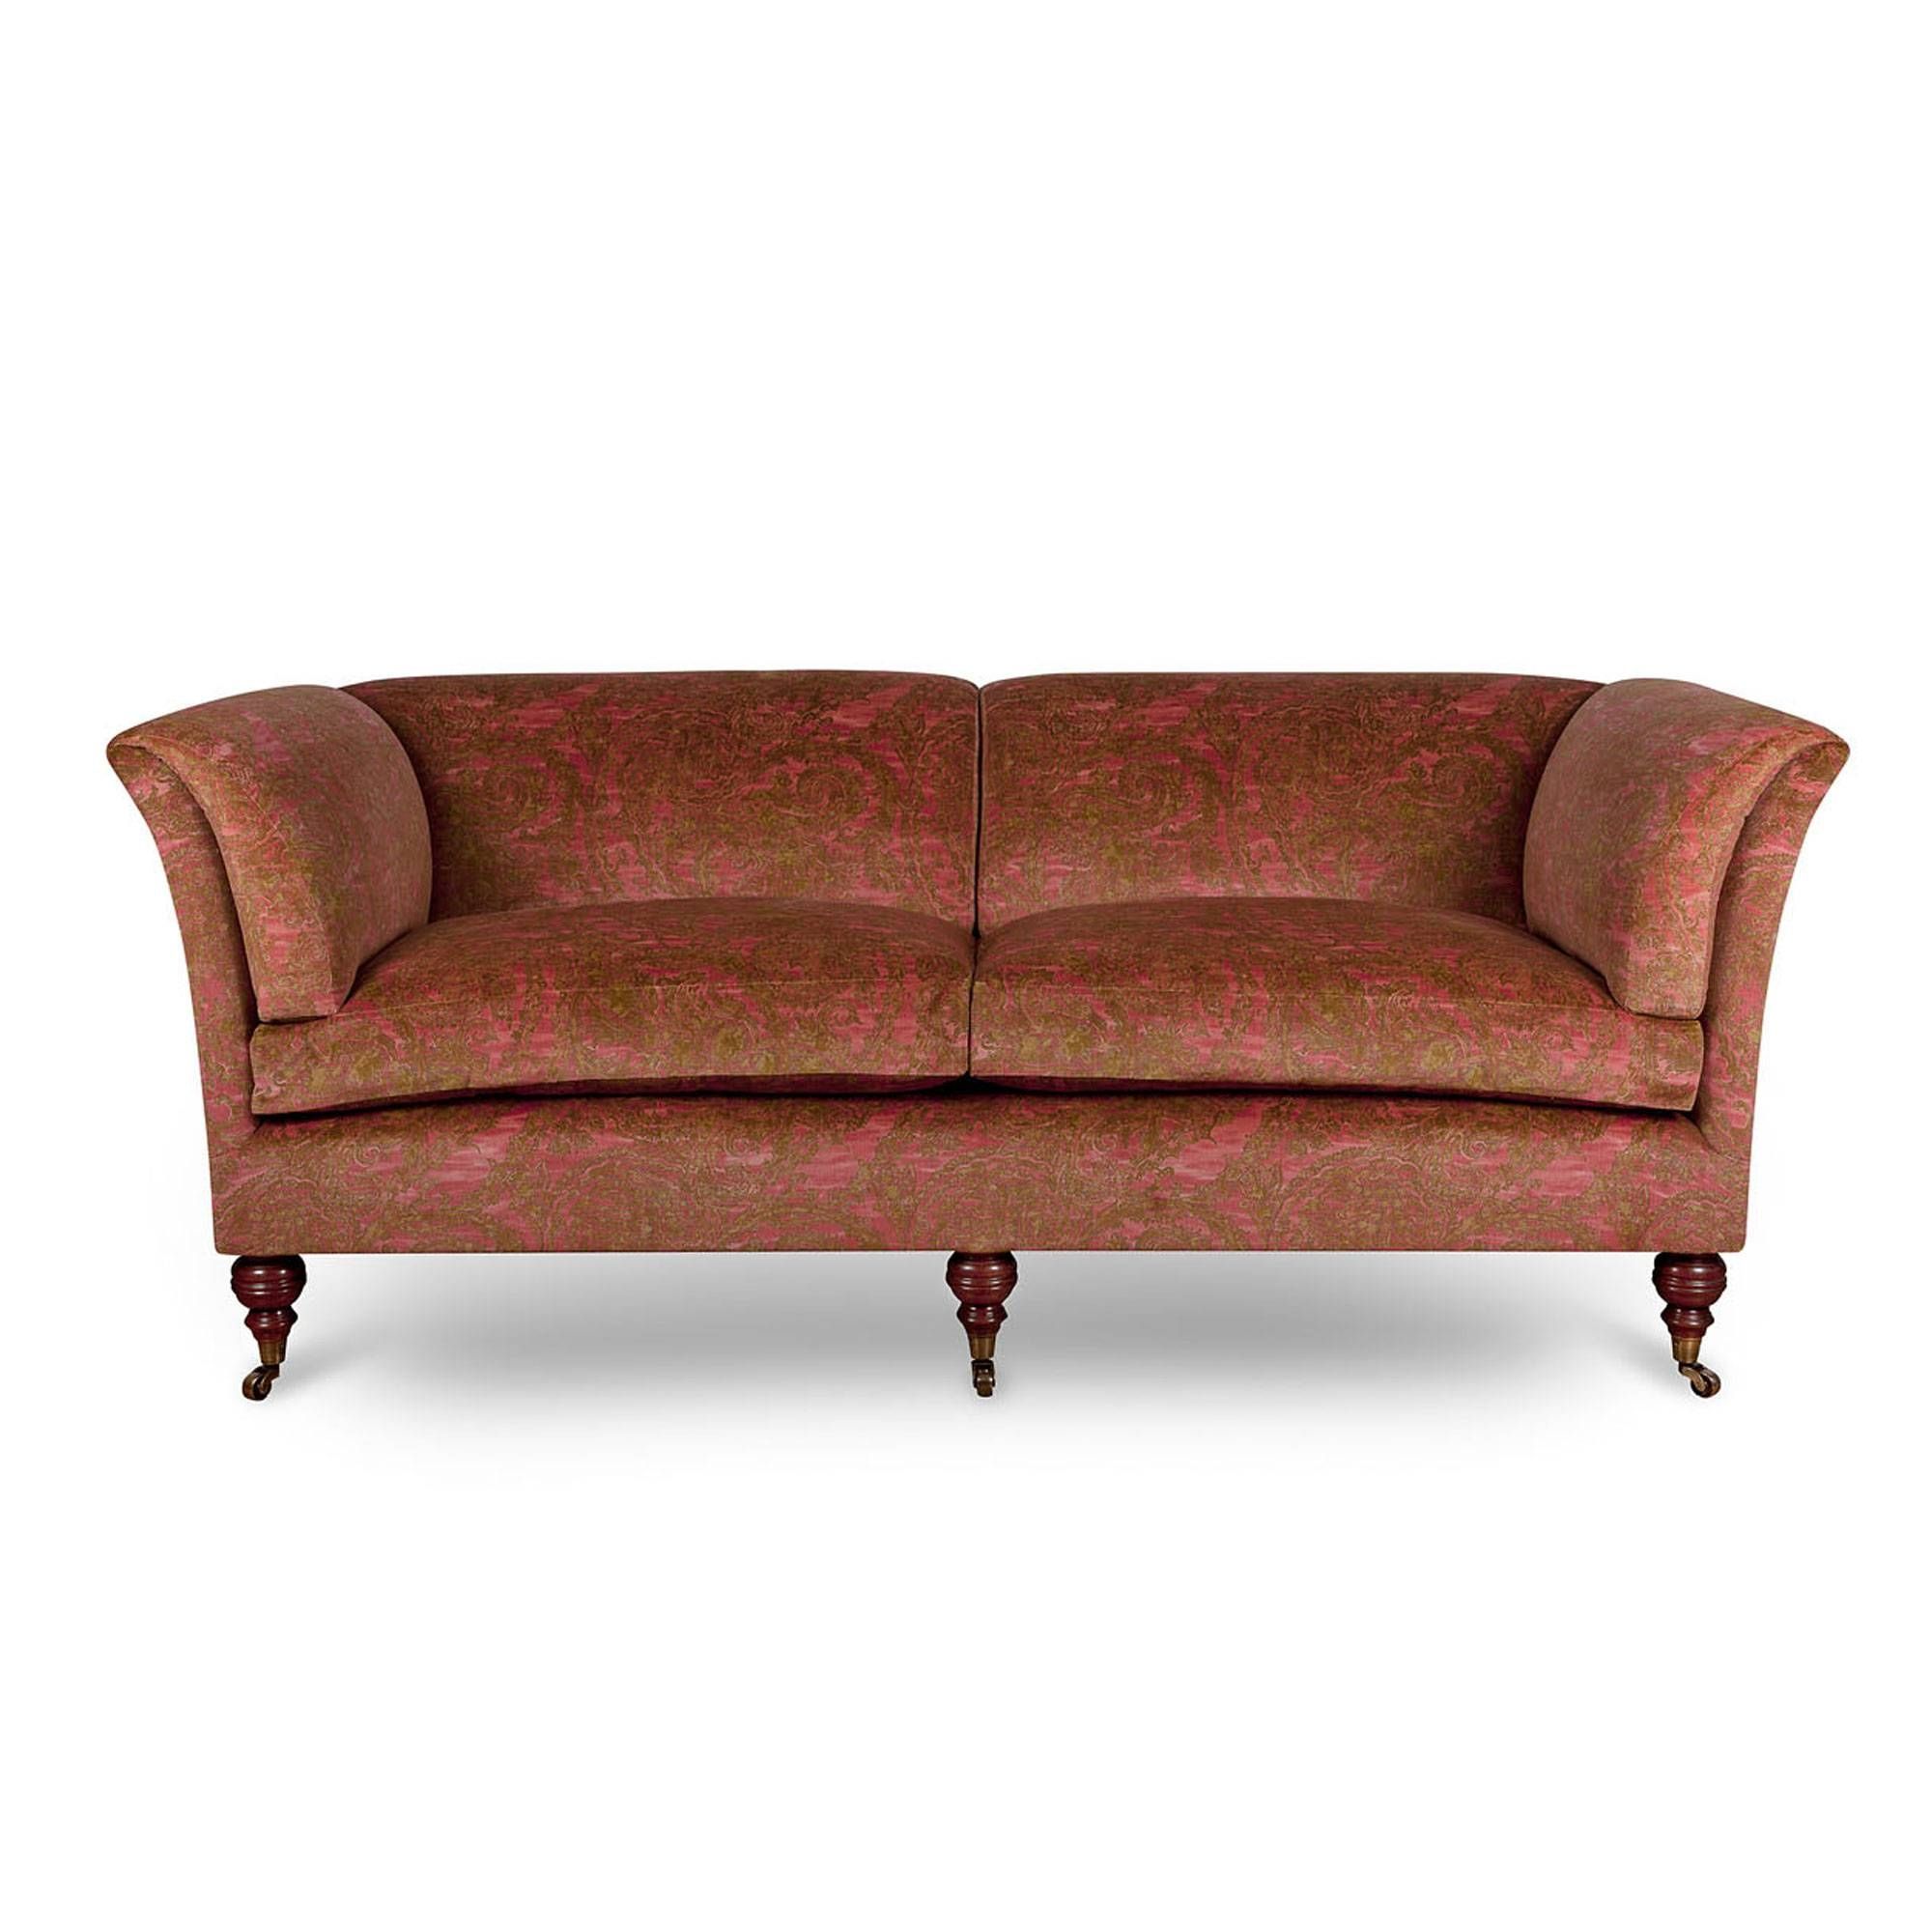 Luxury Sofas | Bespoke Sofas | Handmade Sofas | Beaumont & Fletcher Inside Sofas With High Backs (View 16 of 30)